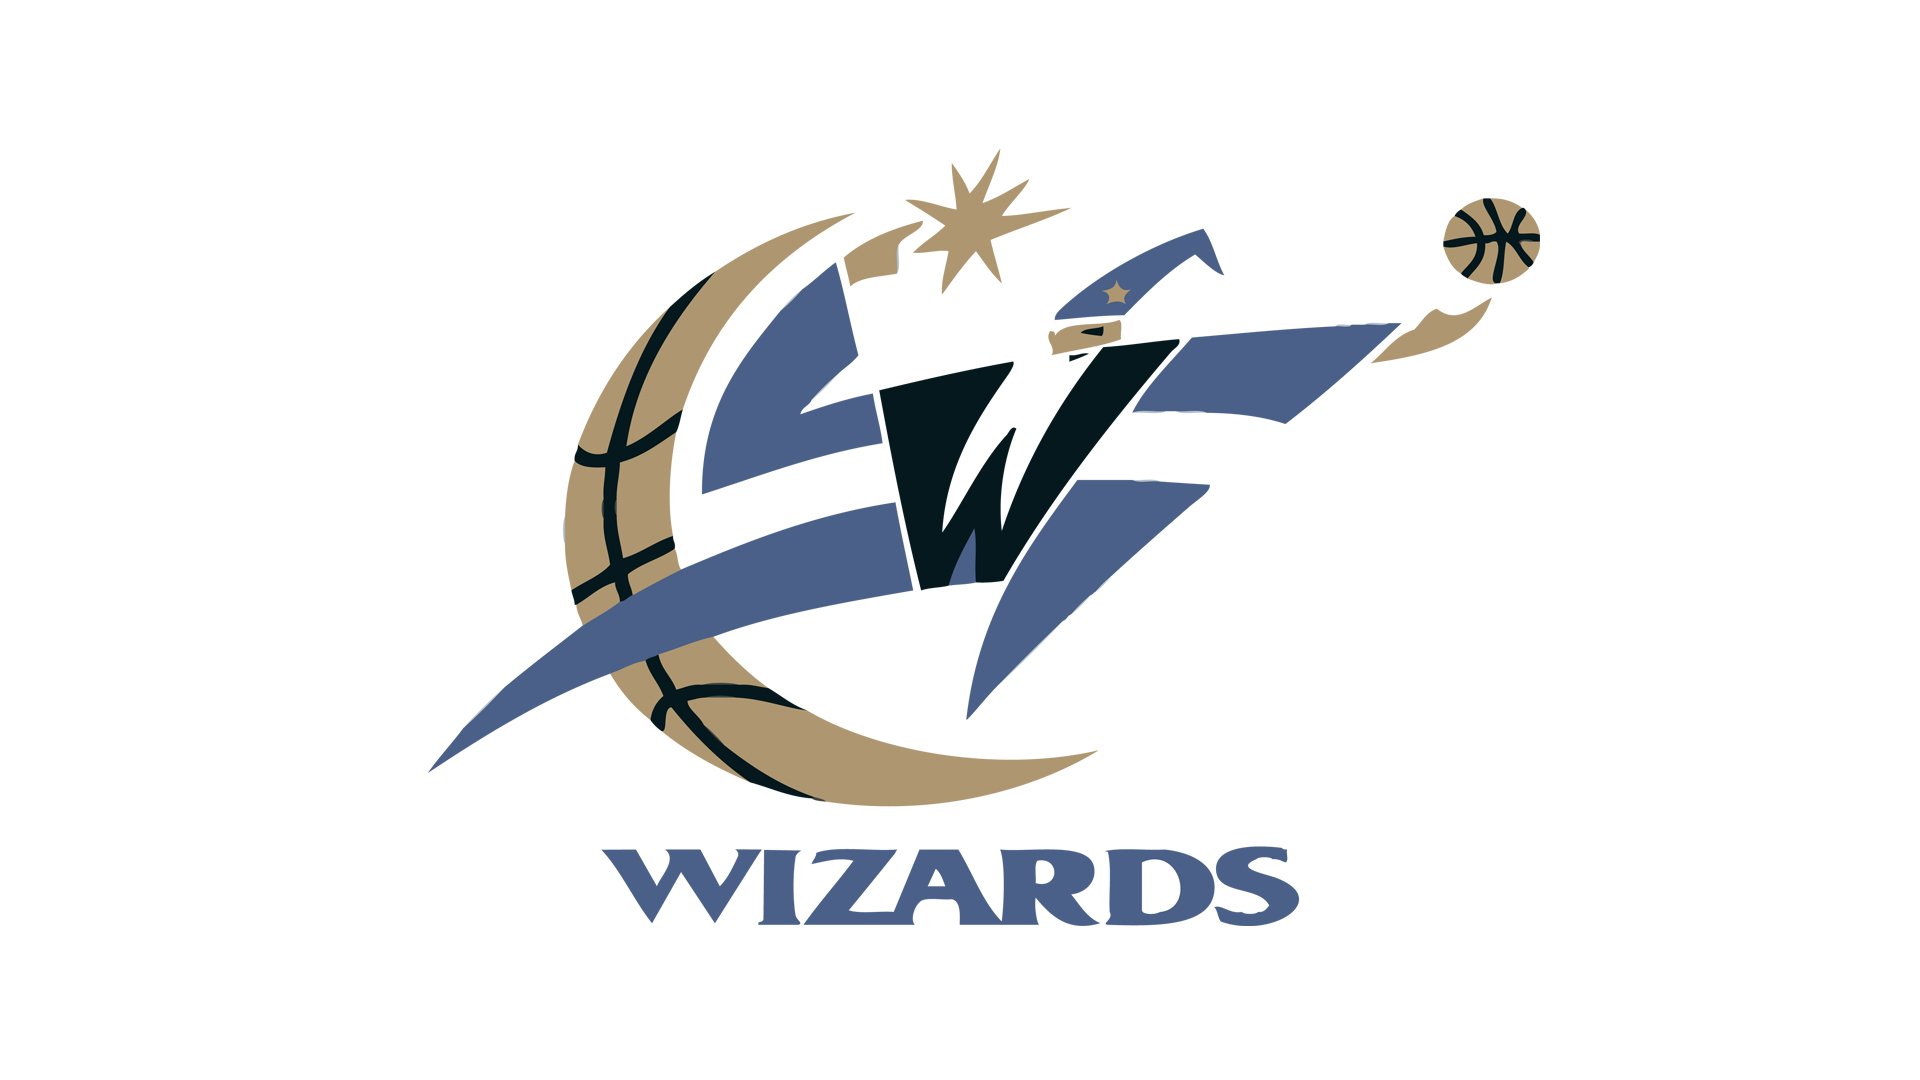 Washington Wizards Logo, Washington Wizards Symbol, Meaning, History and Evolution1920 x 1080